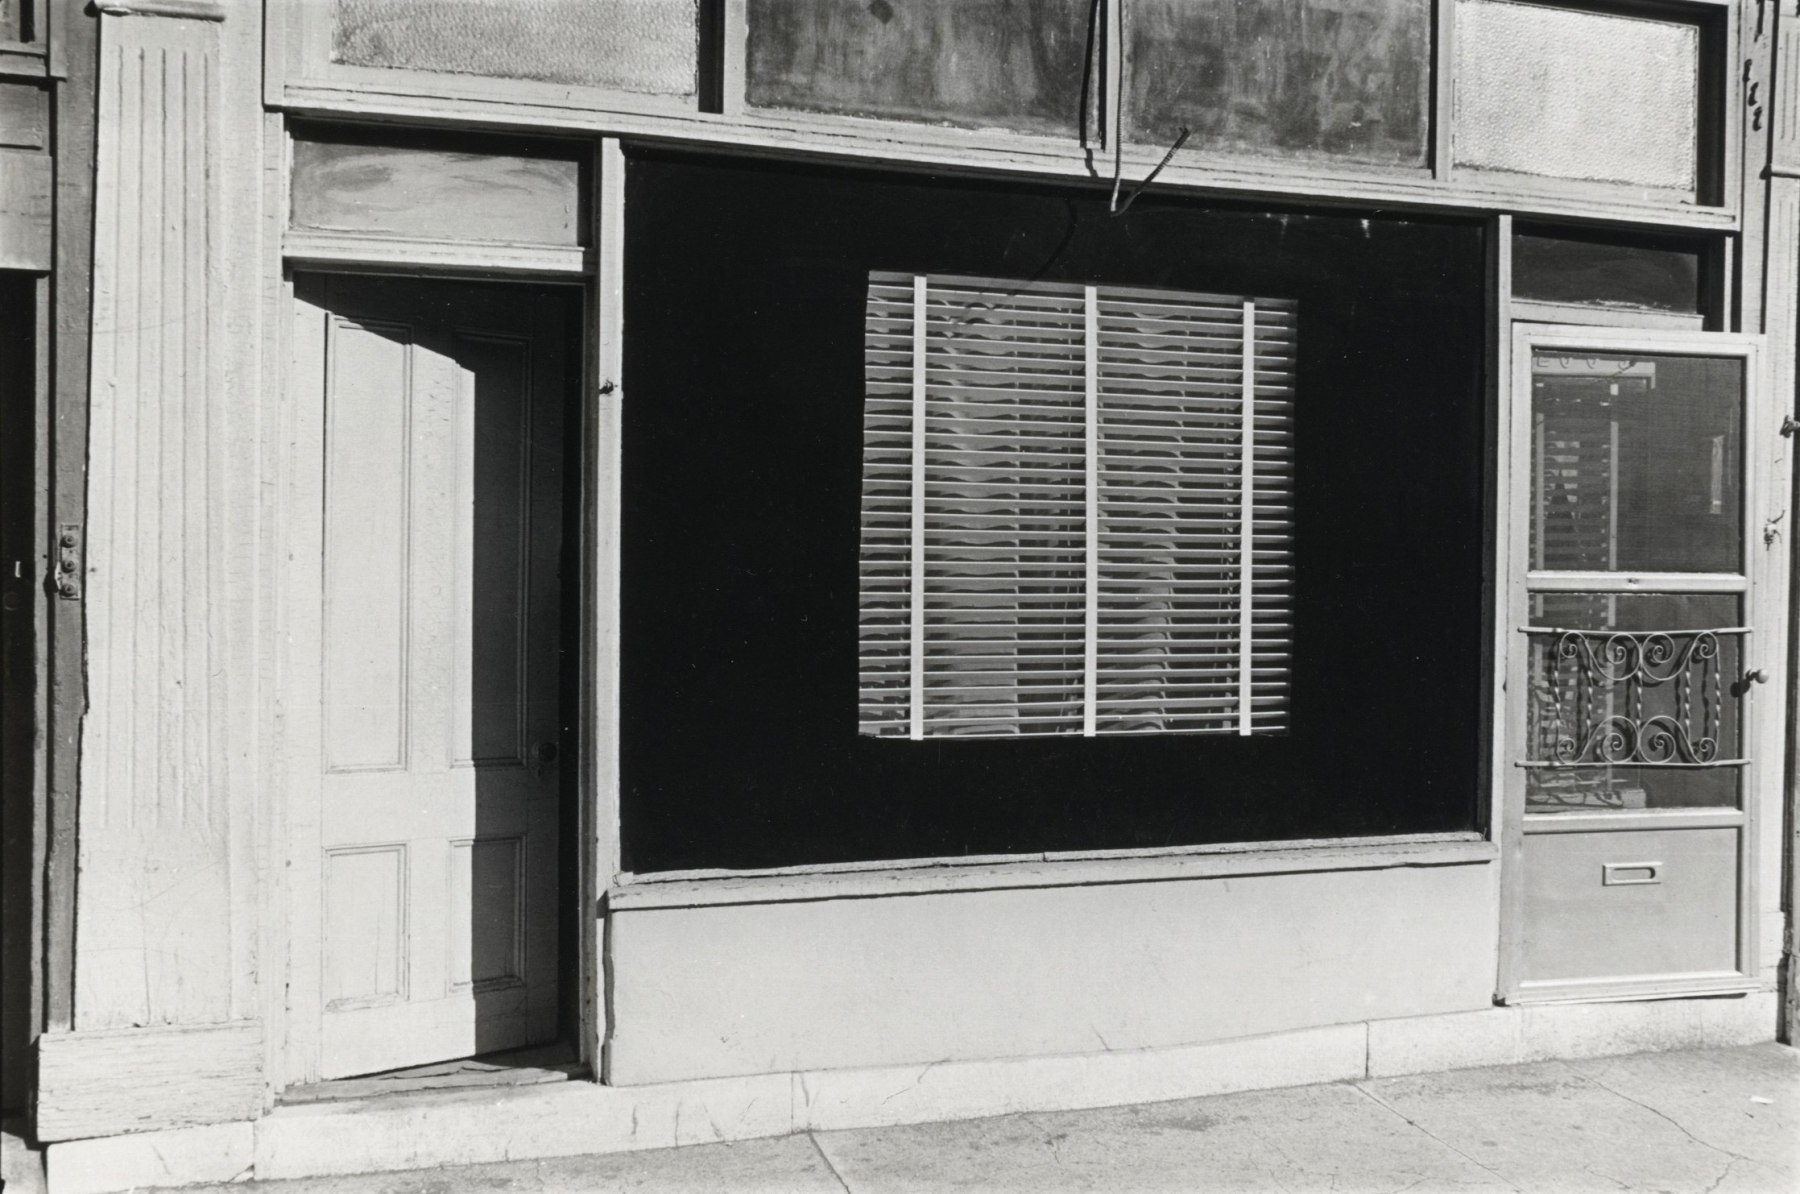 Sout Street Storefront, 1973